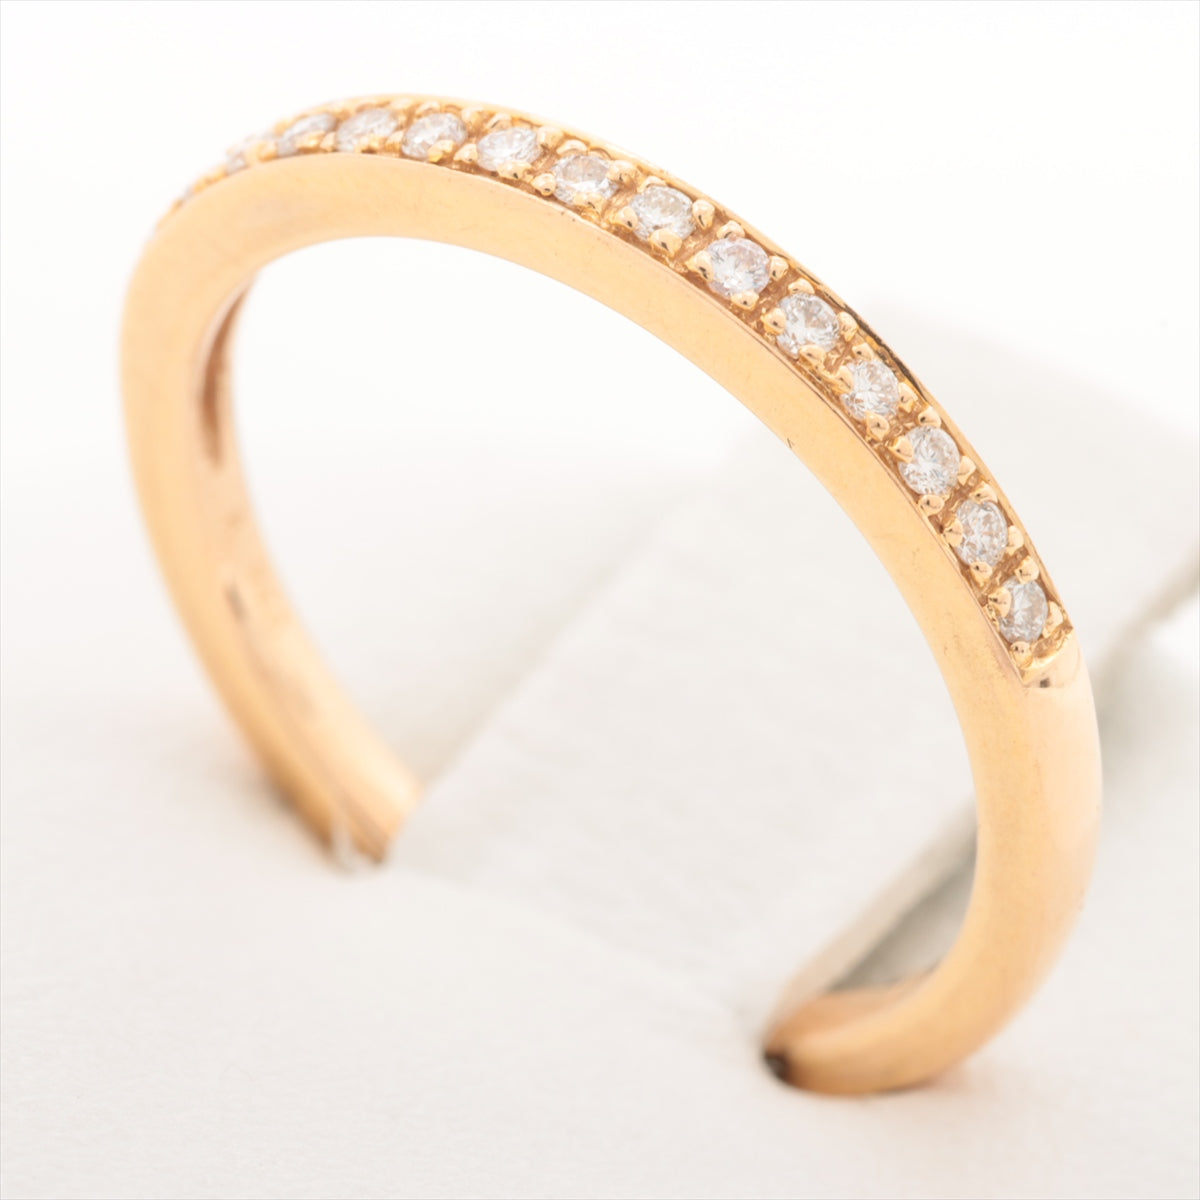 Ponte Vecchio diamond rings 750(PG) 1.9g D0.09